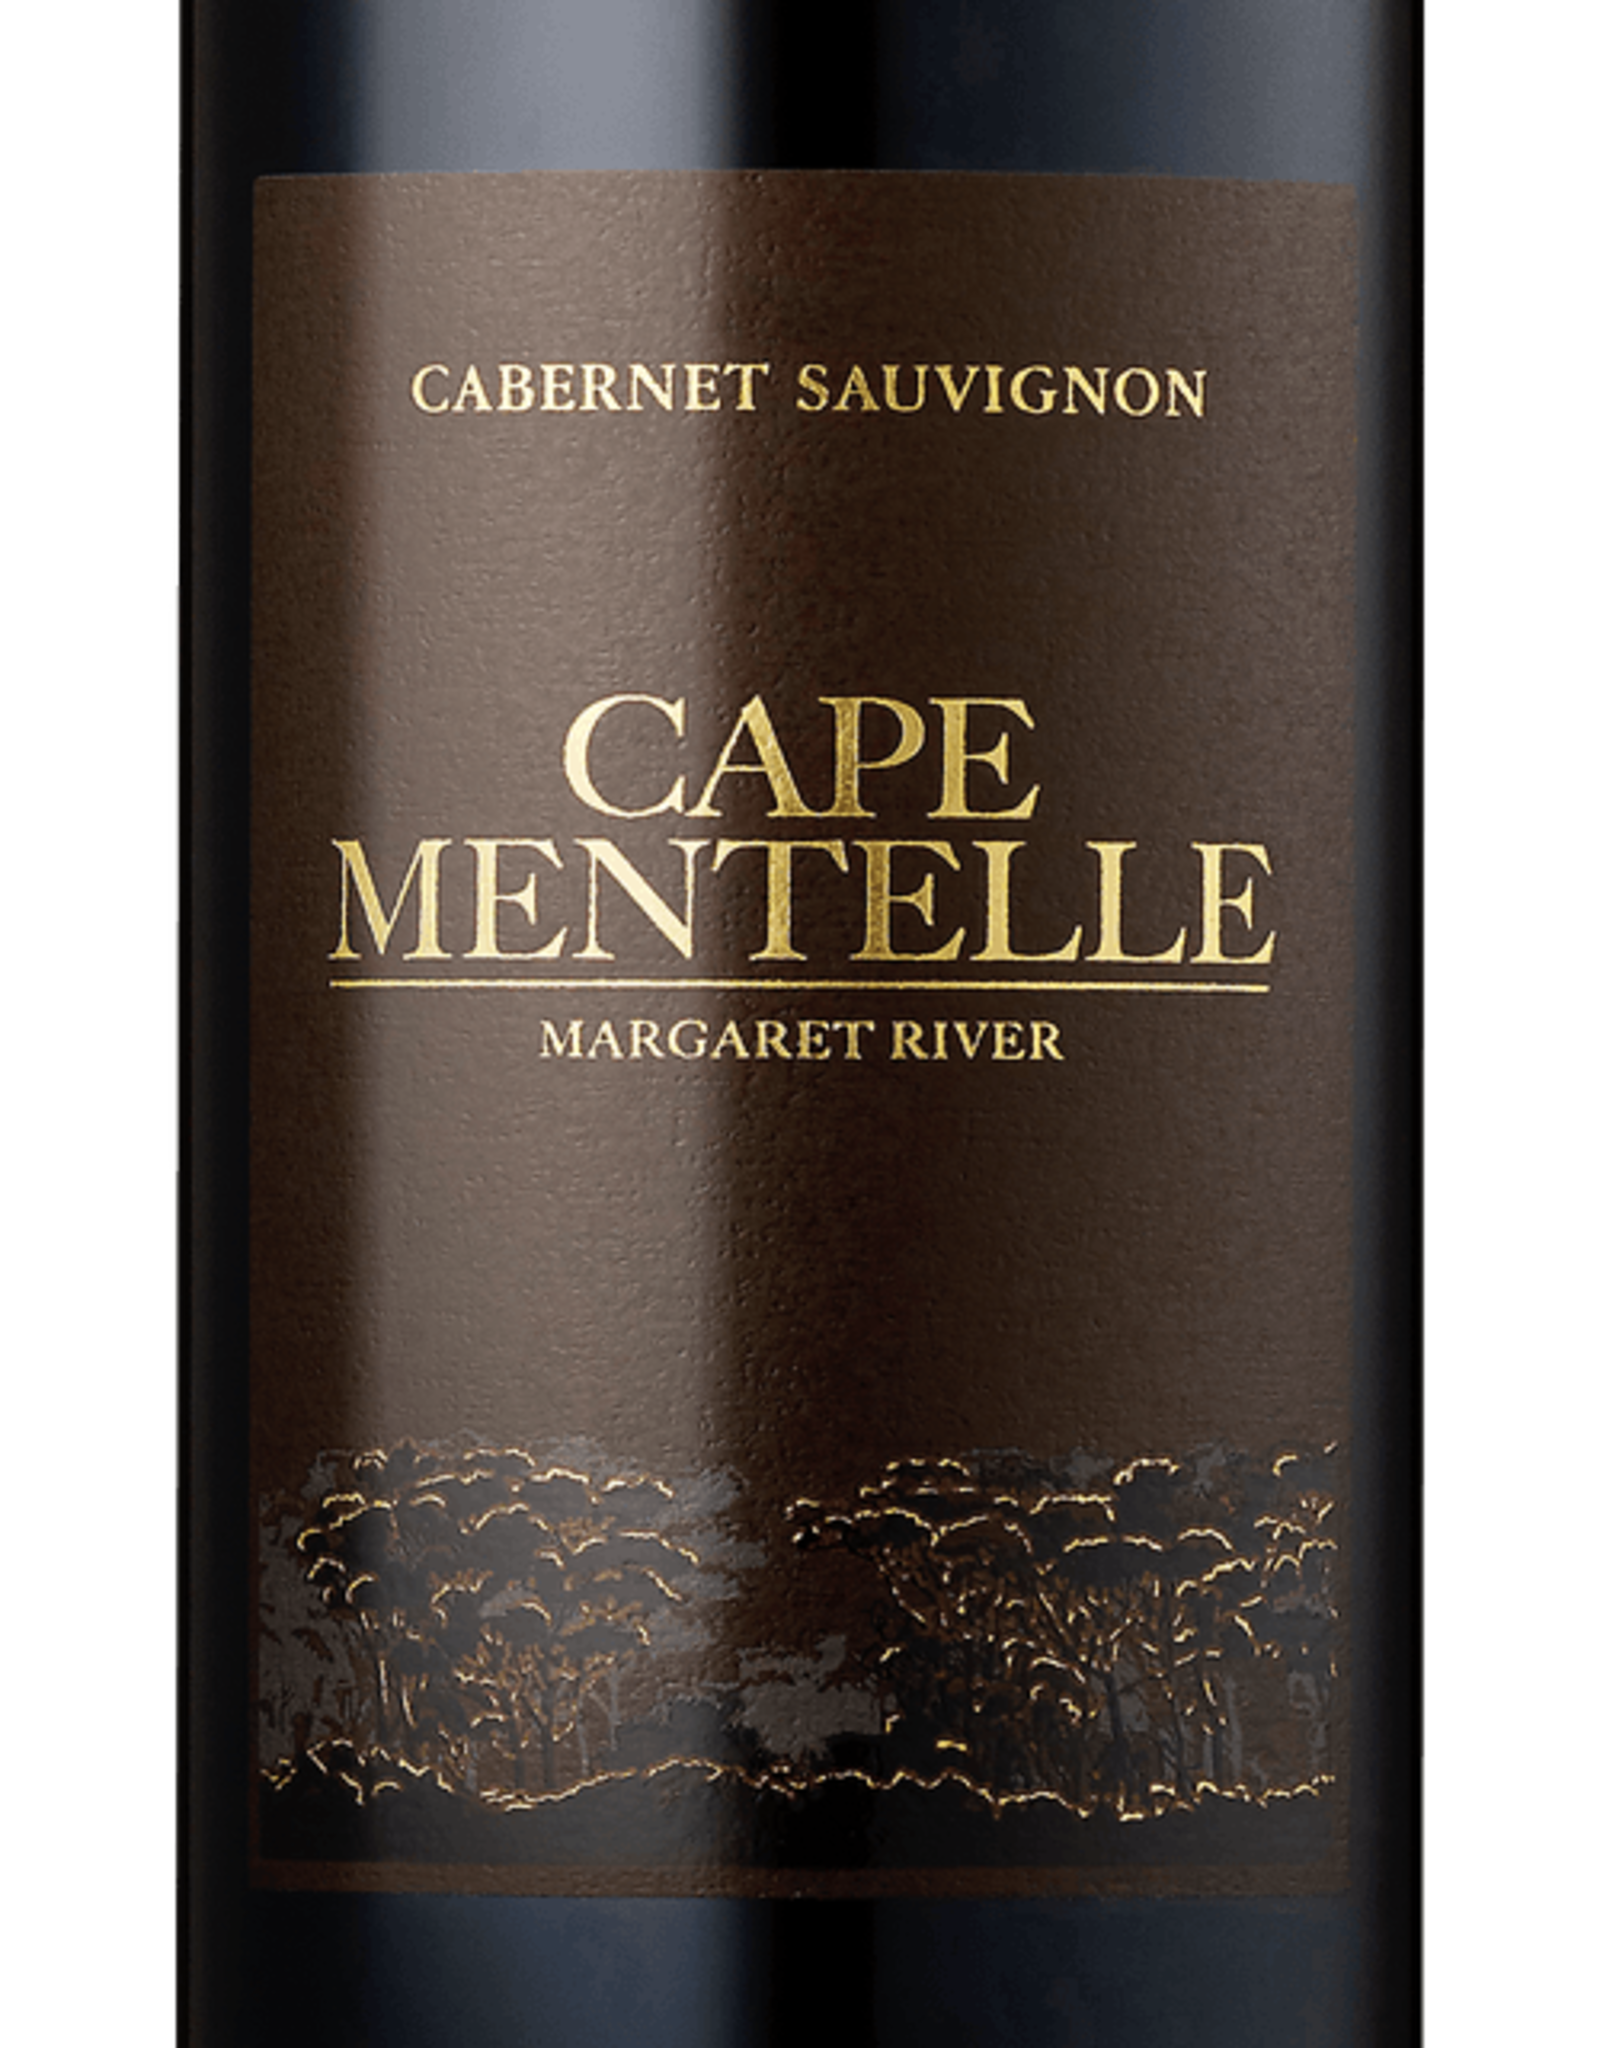 Cape Mentelle Cabernet Sauvignon 2012